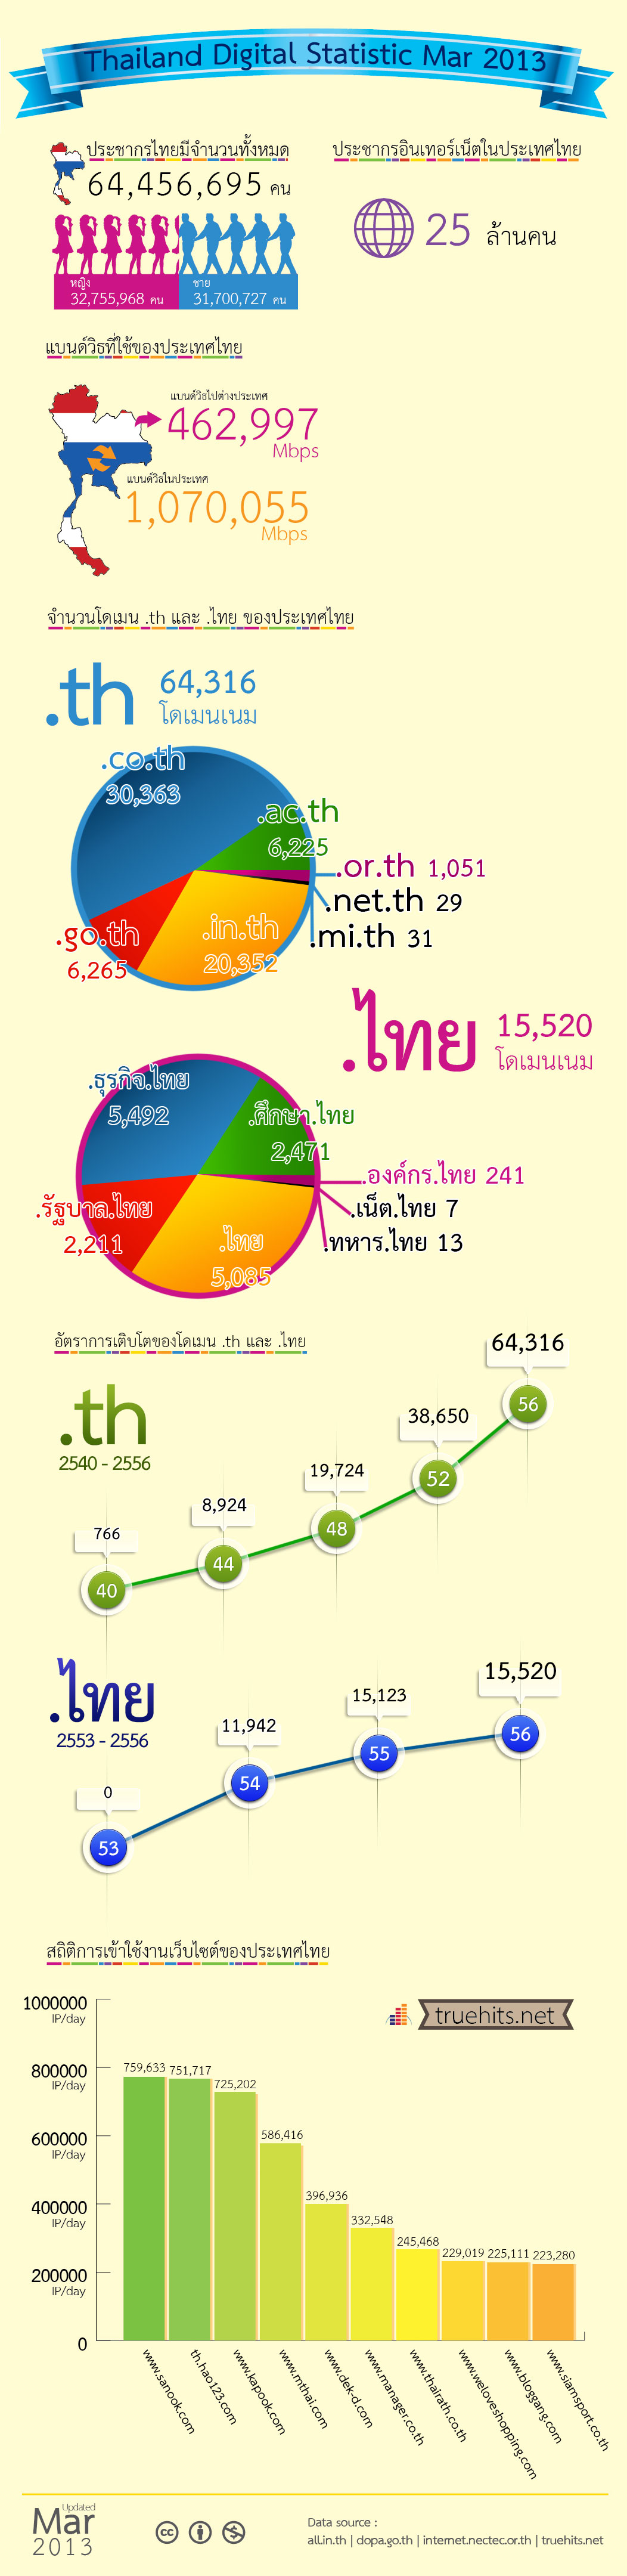 infographic-2013-new